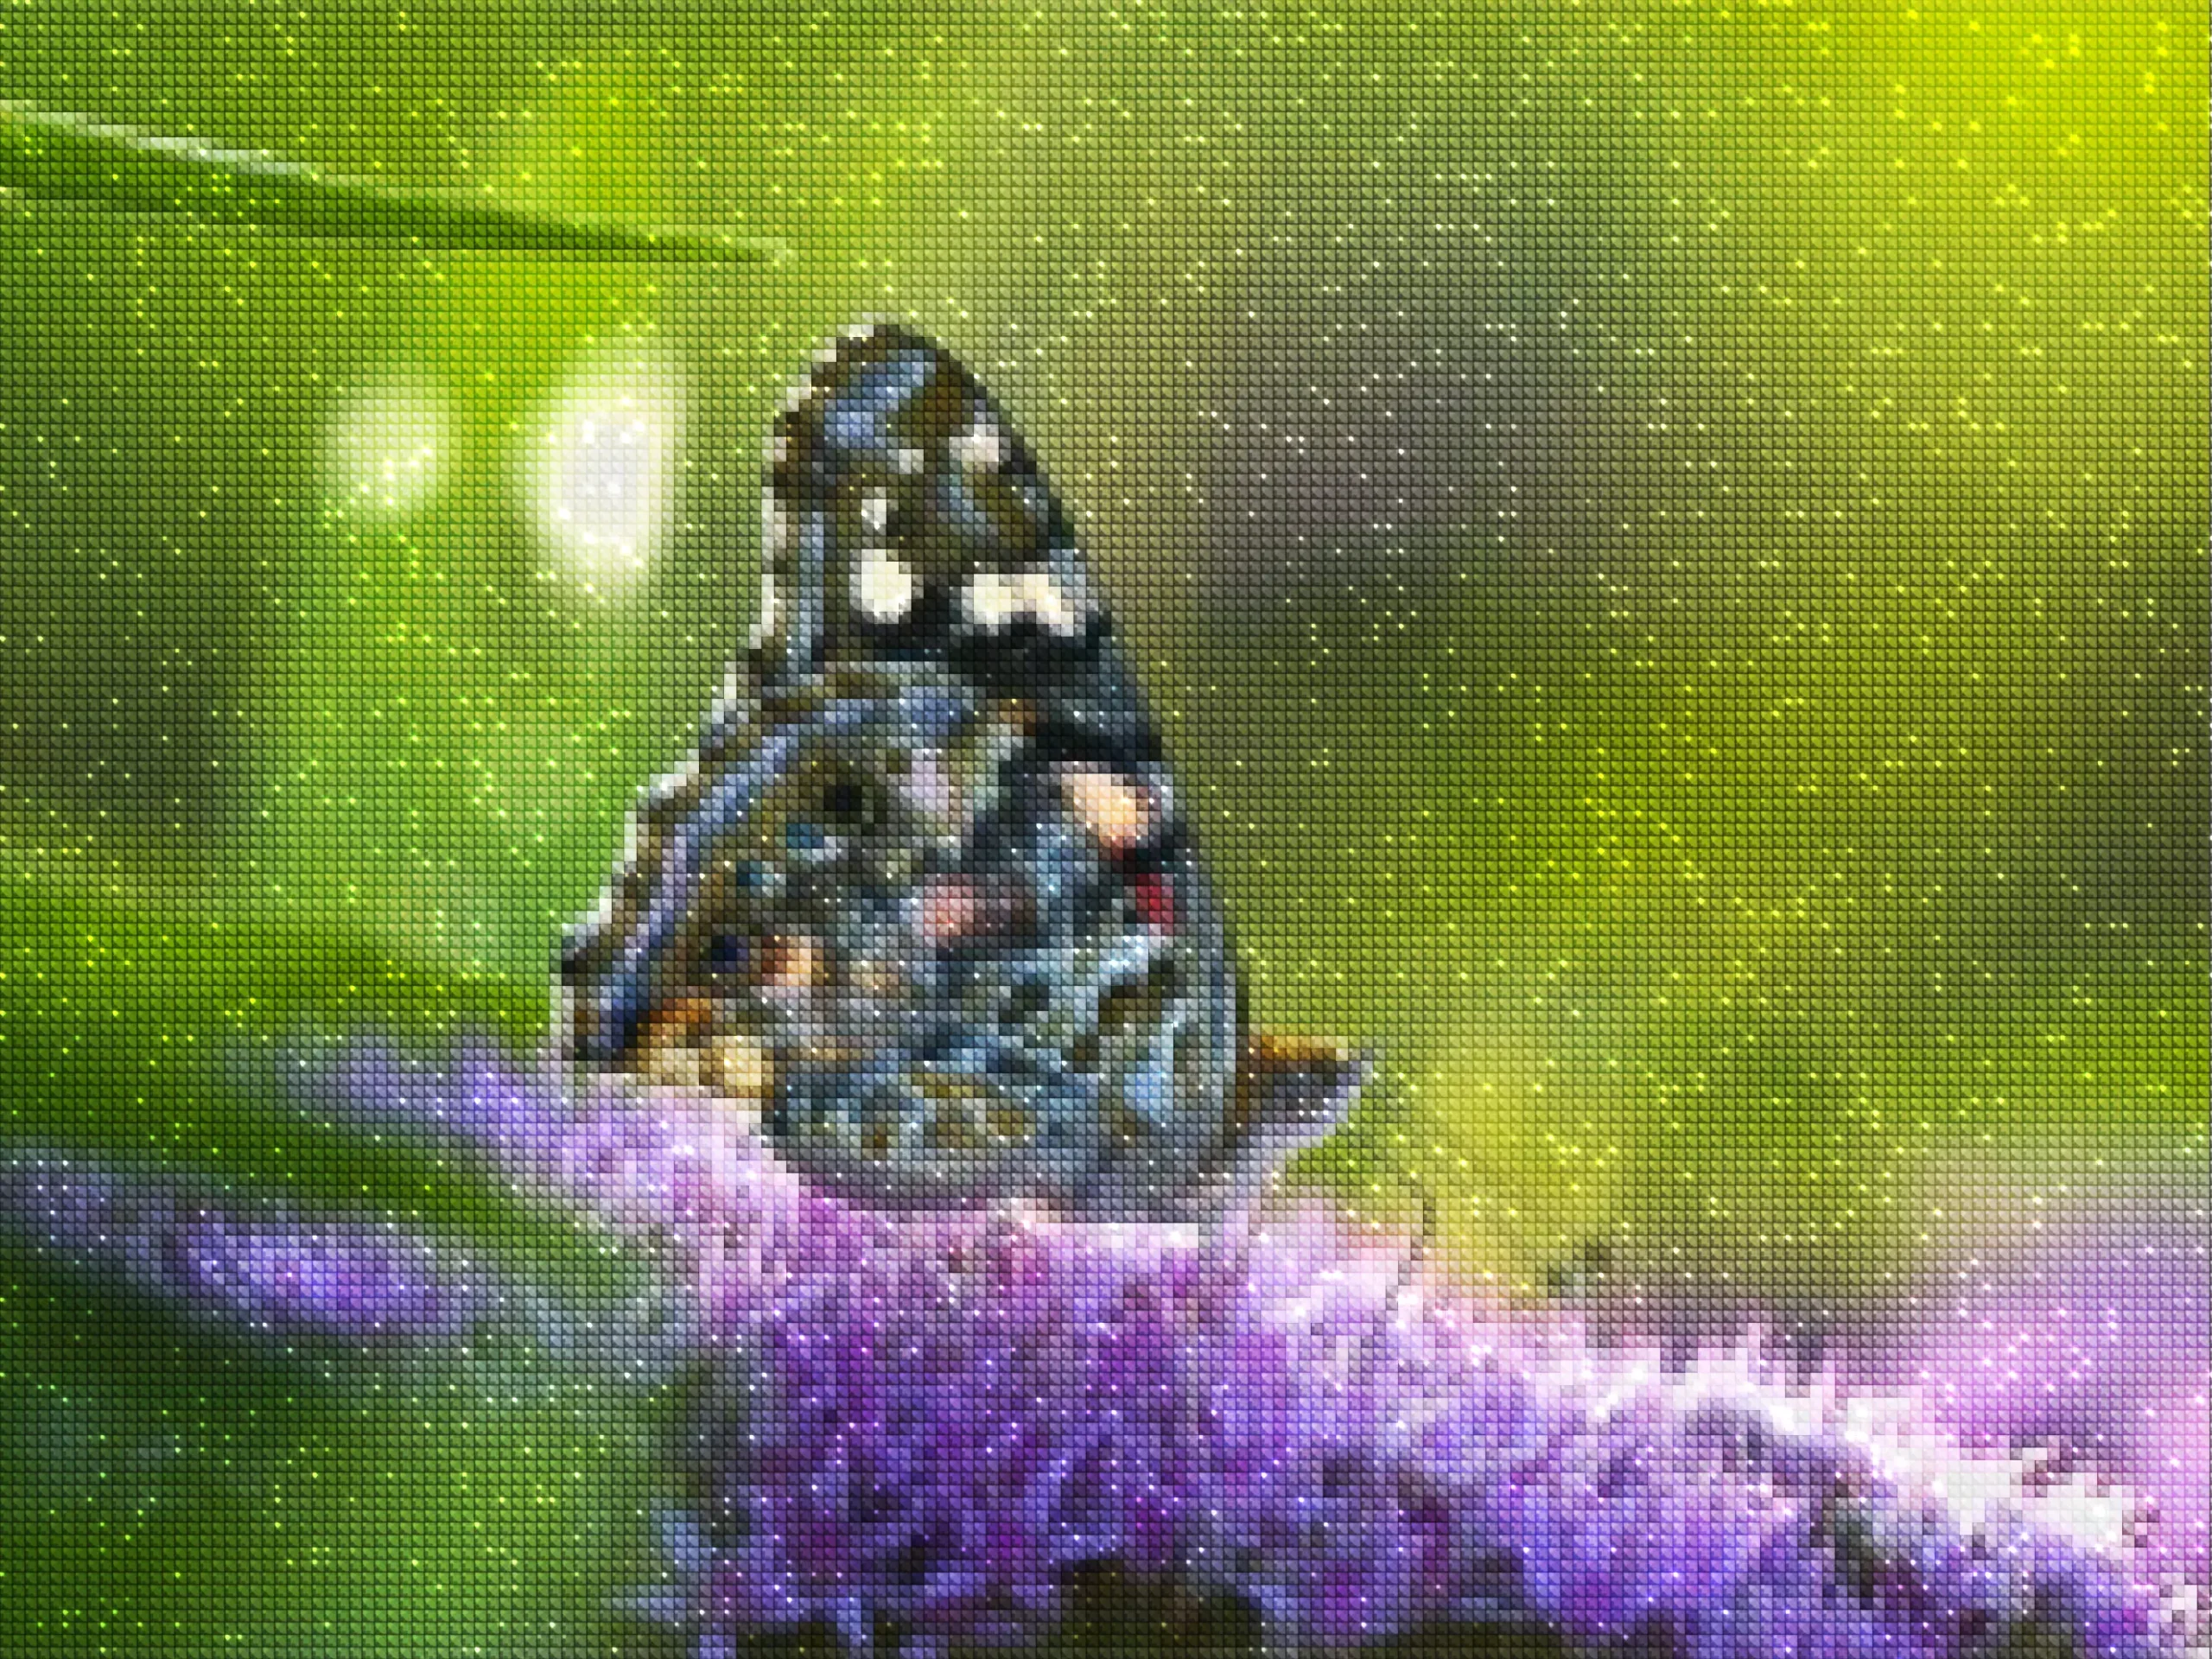 Diamonds-Wizard-Diamond-Painting-Kits-Tiere-Schmetterling-Der Schmetterling auf der lila Blume-diamonds.webp